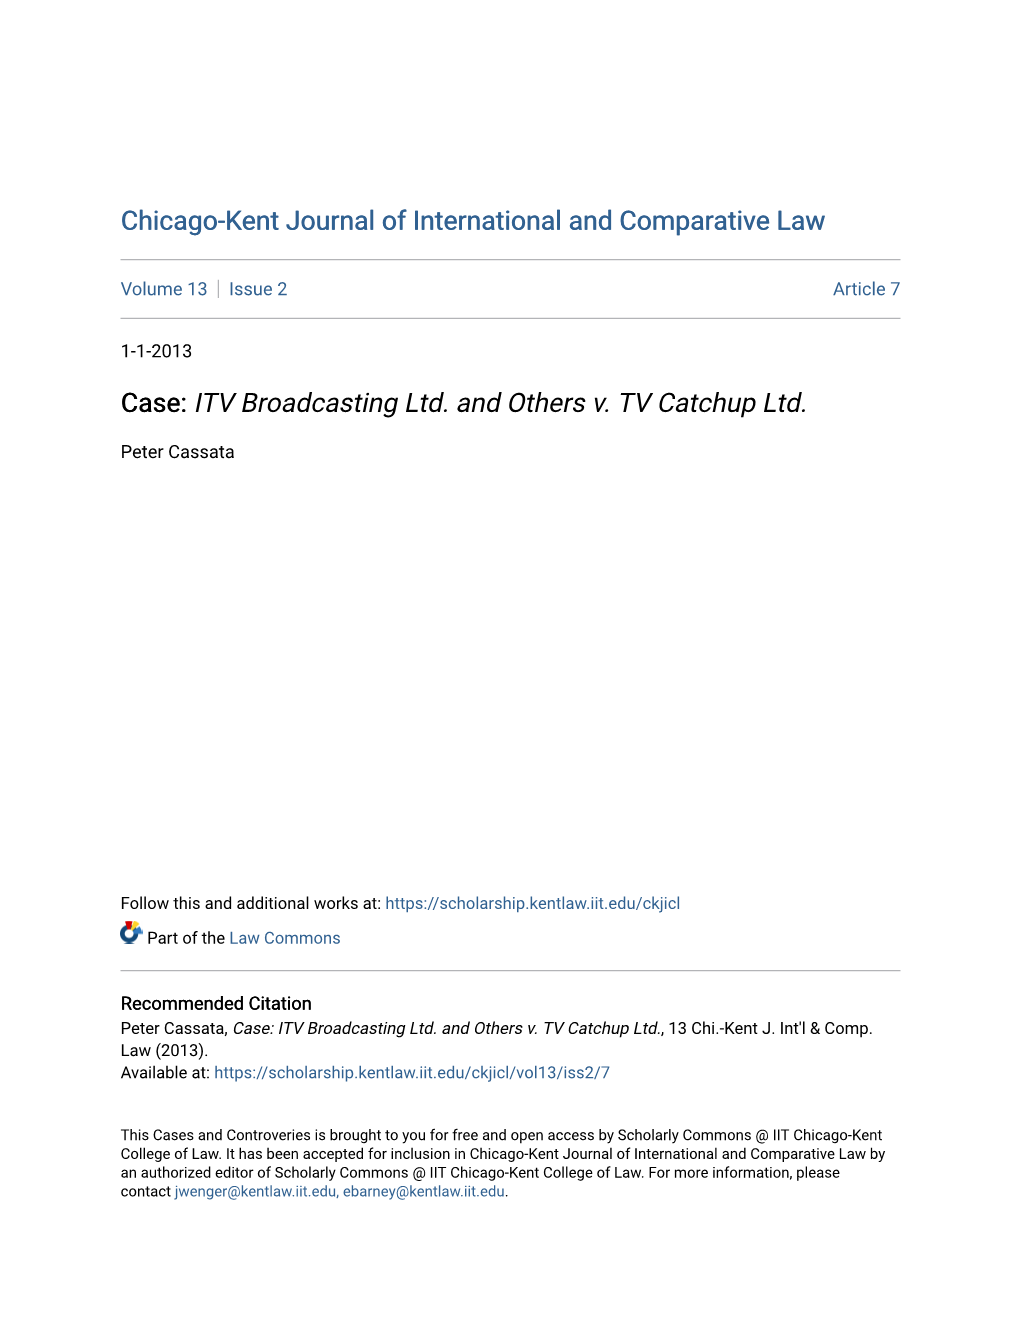 Case: ITV Broadcasting Ltd. and Others V. TV Catchup Ltd